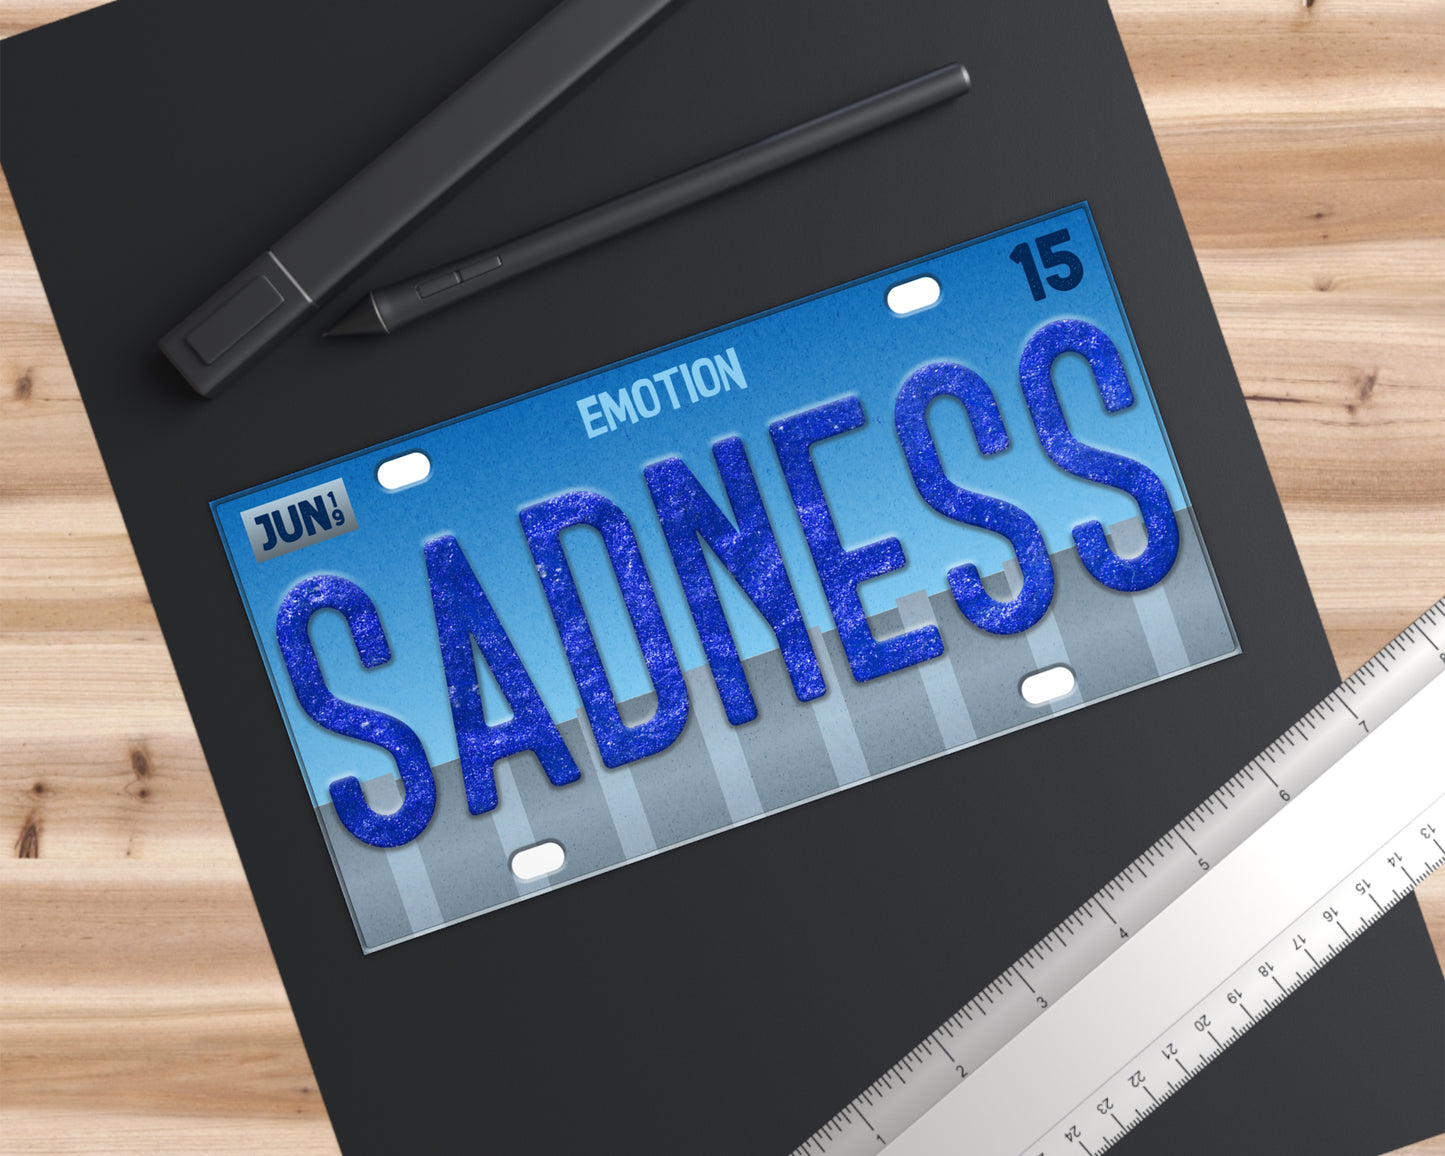 Sadness emotion bumper sticker